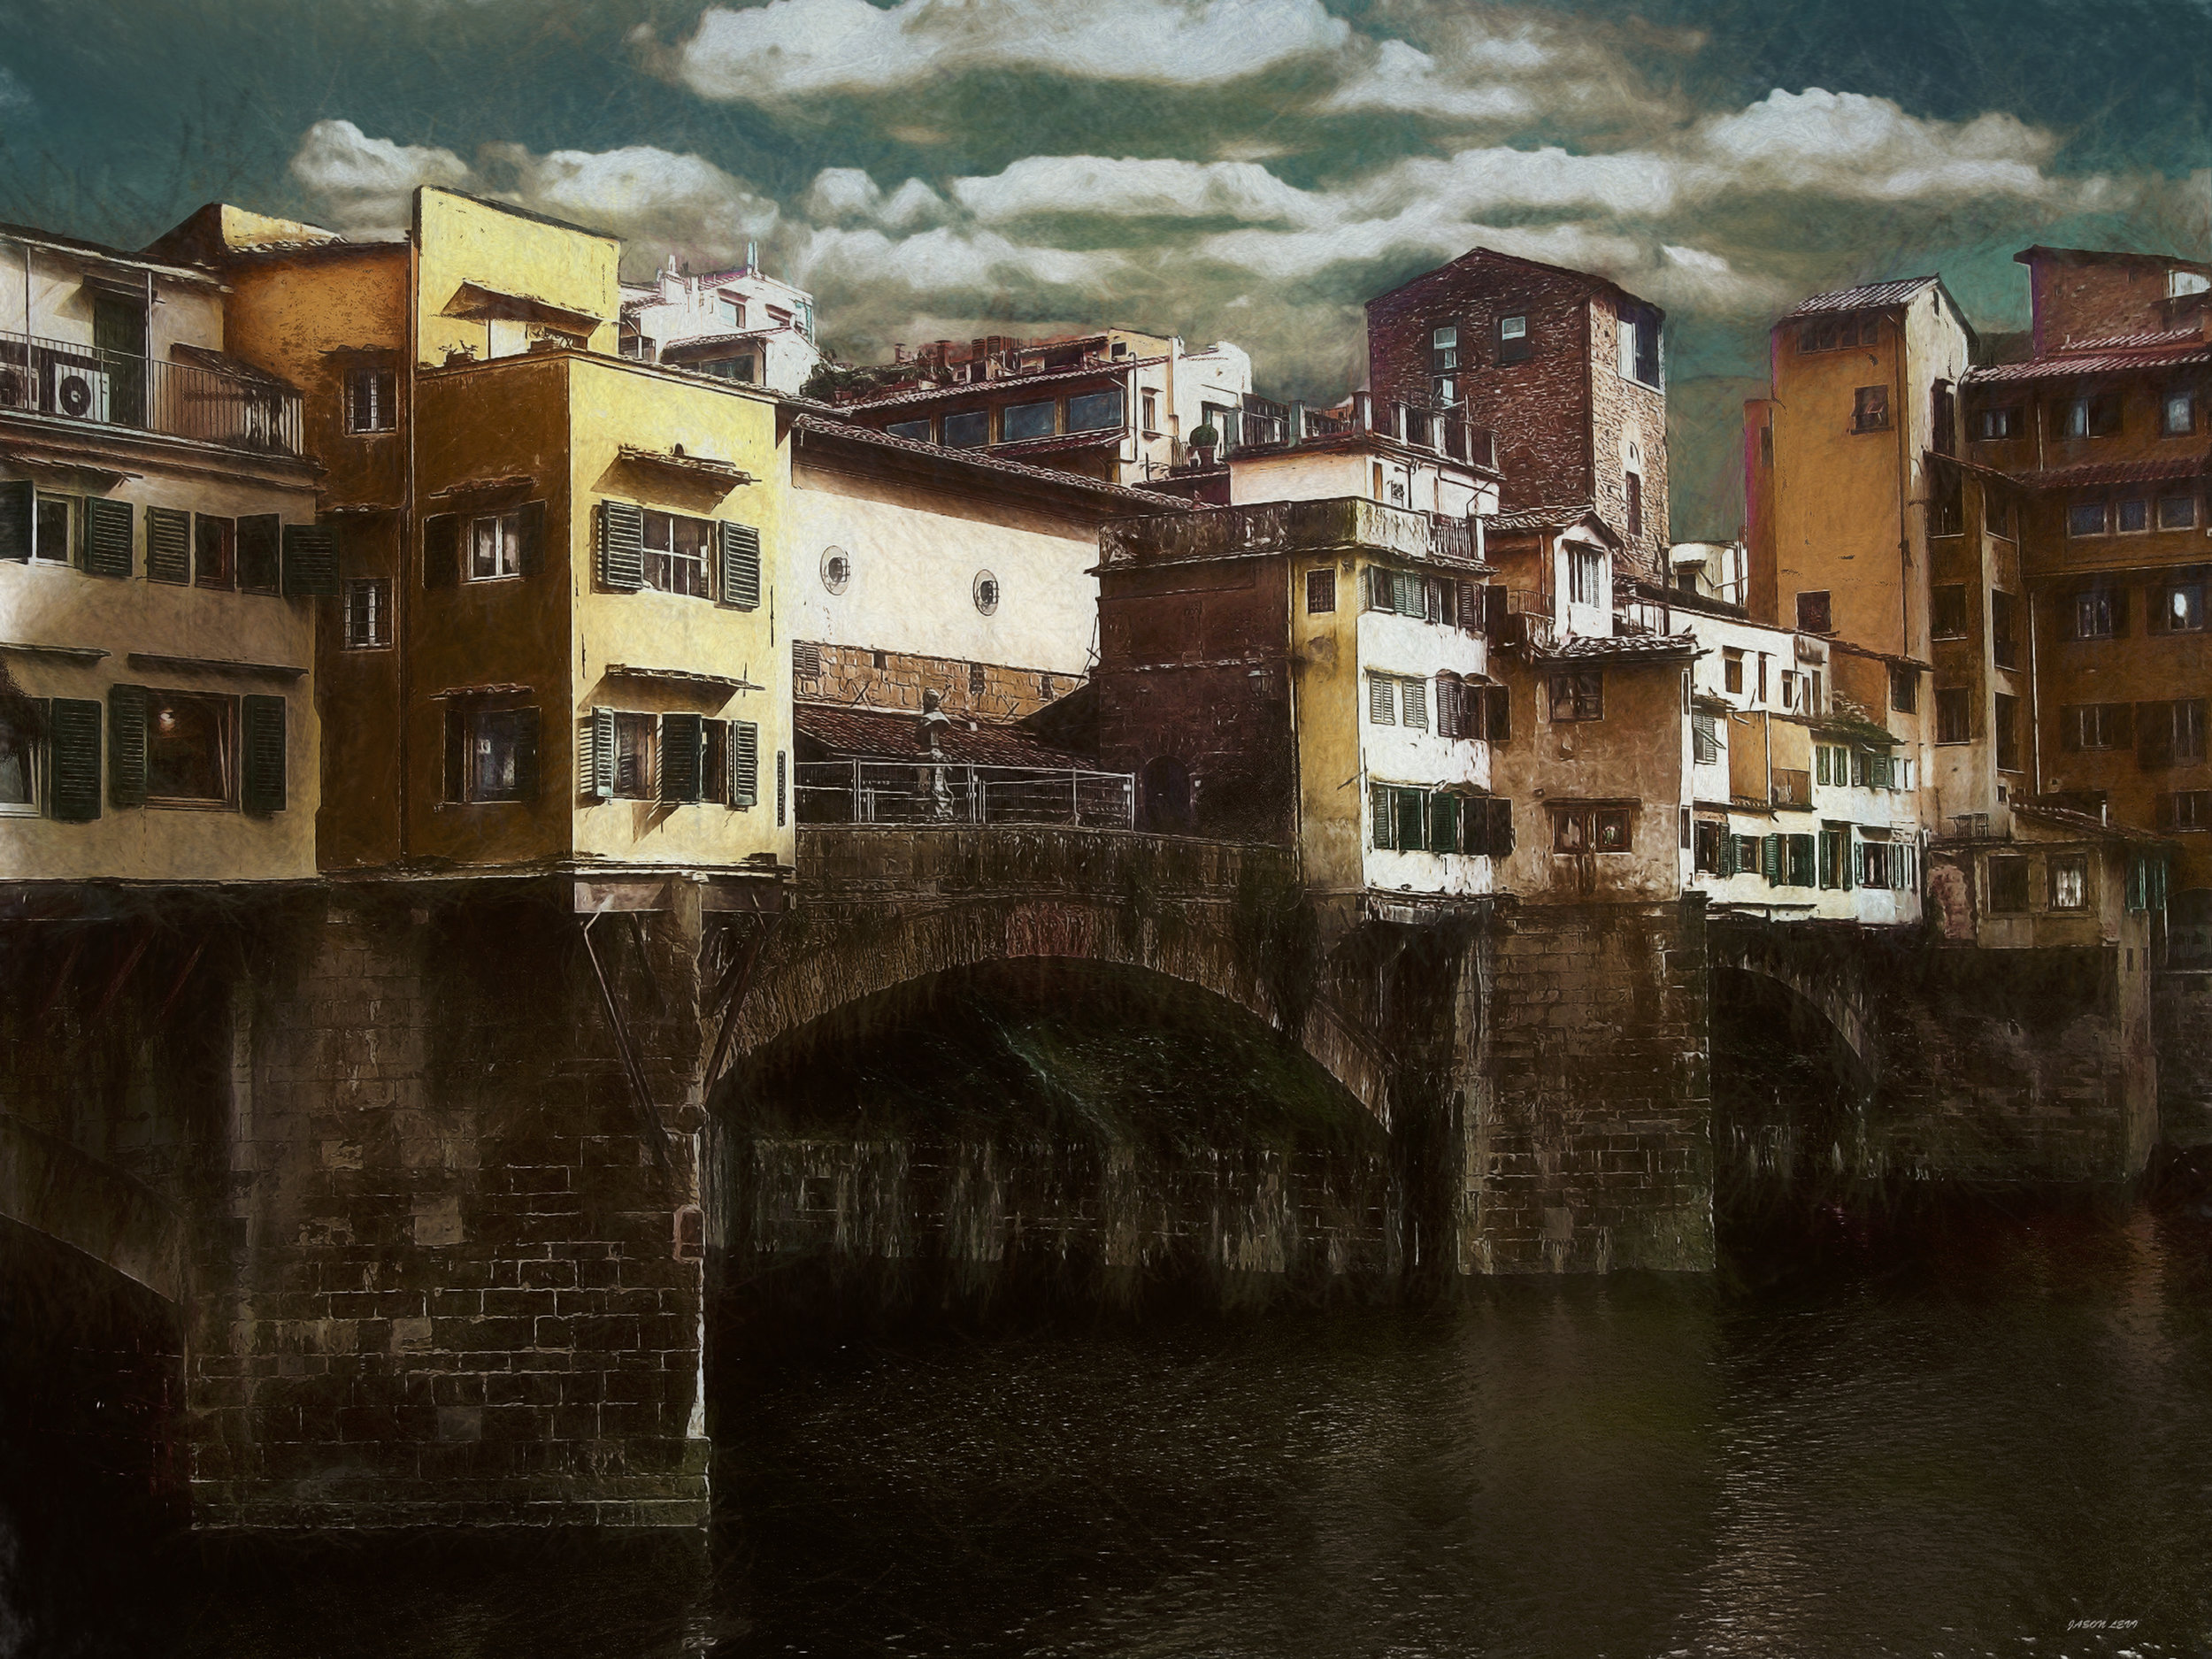 Florence's Ponte Vecchio